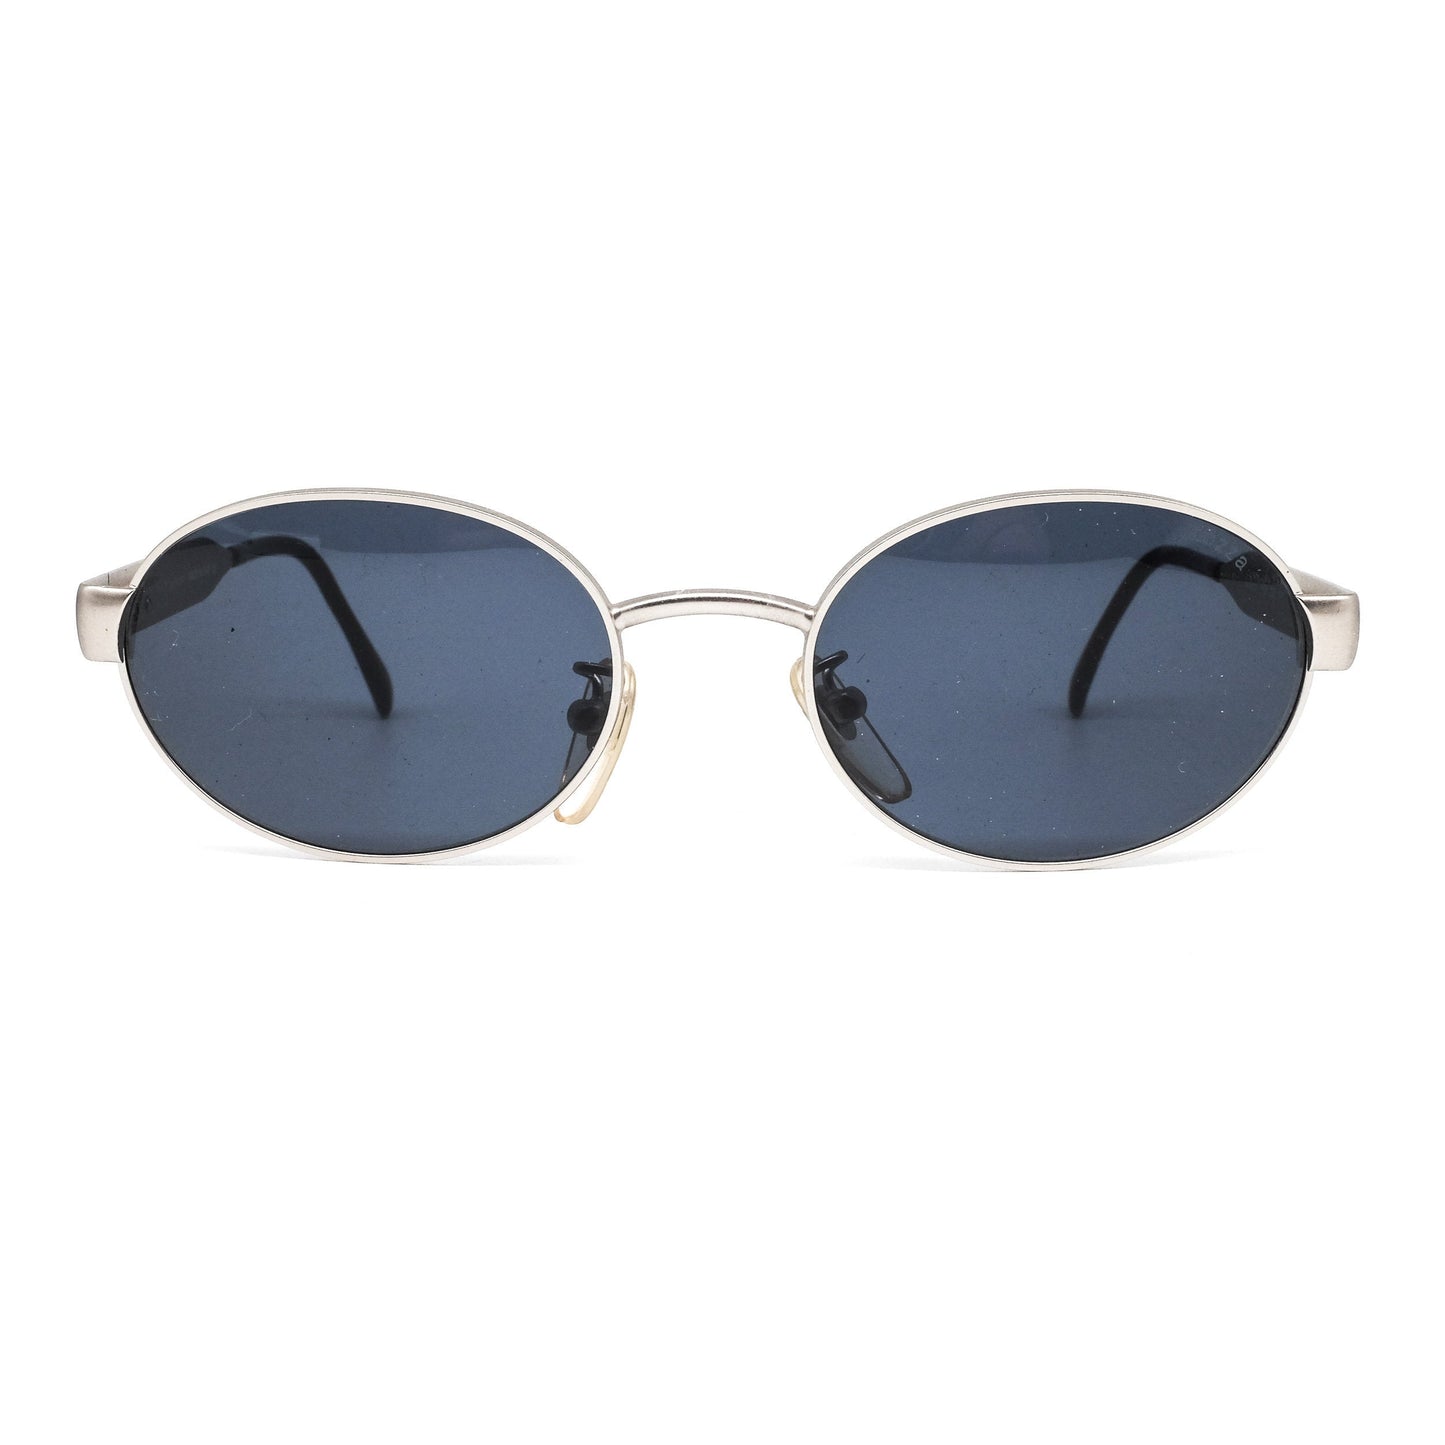 Lozza SL1128 silver metallic sunglasses with black lenses made in Italy 1990s NOS